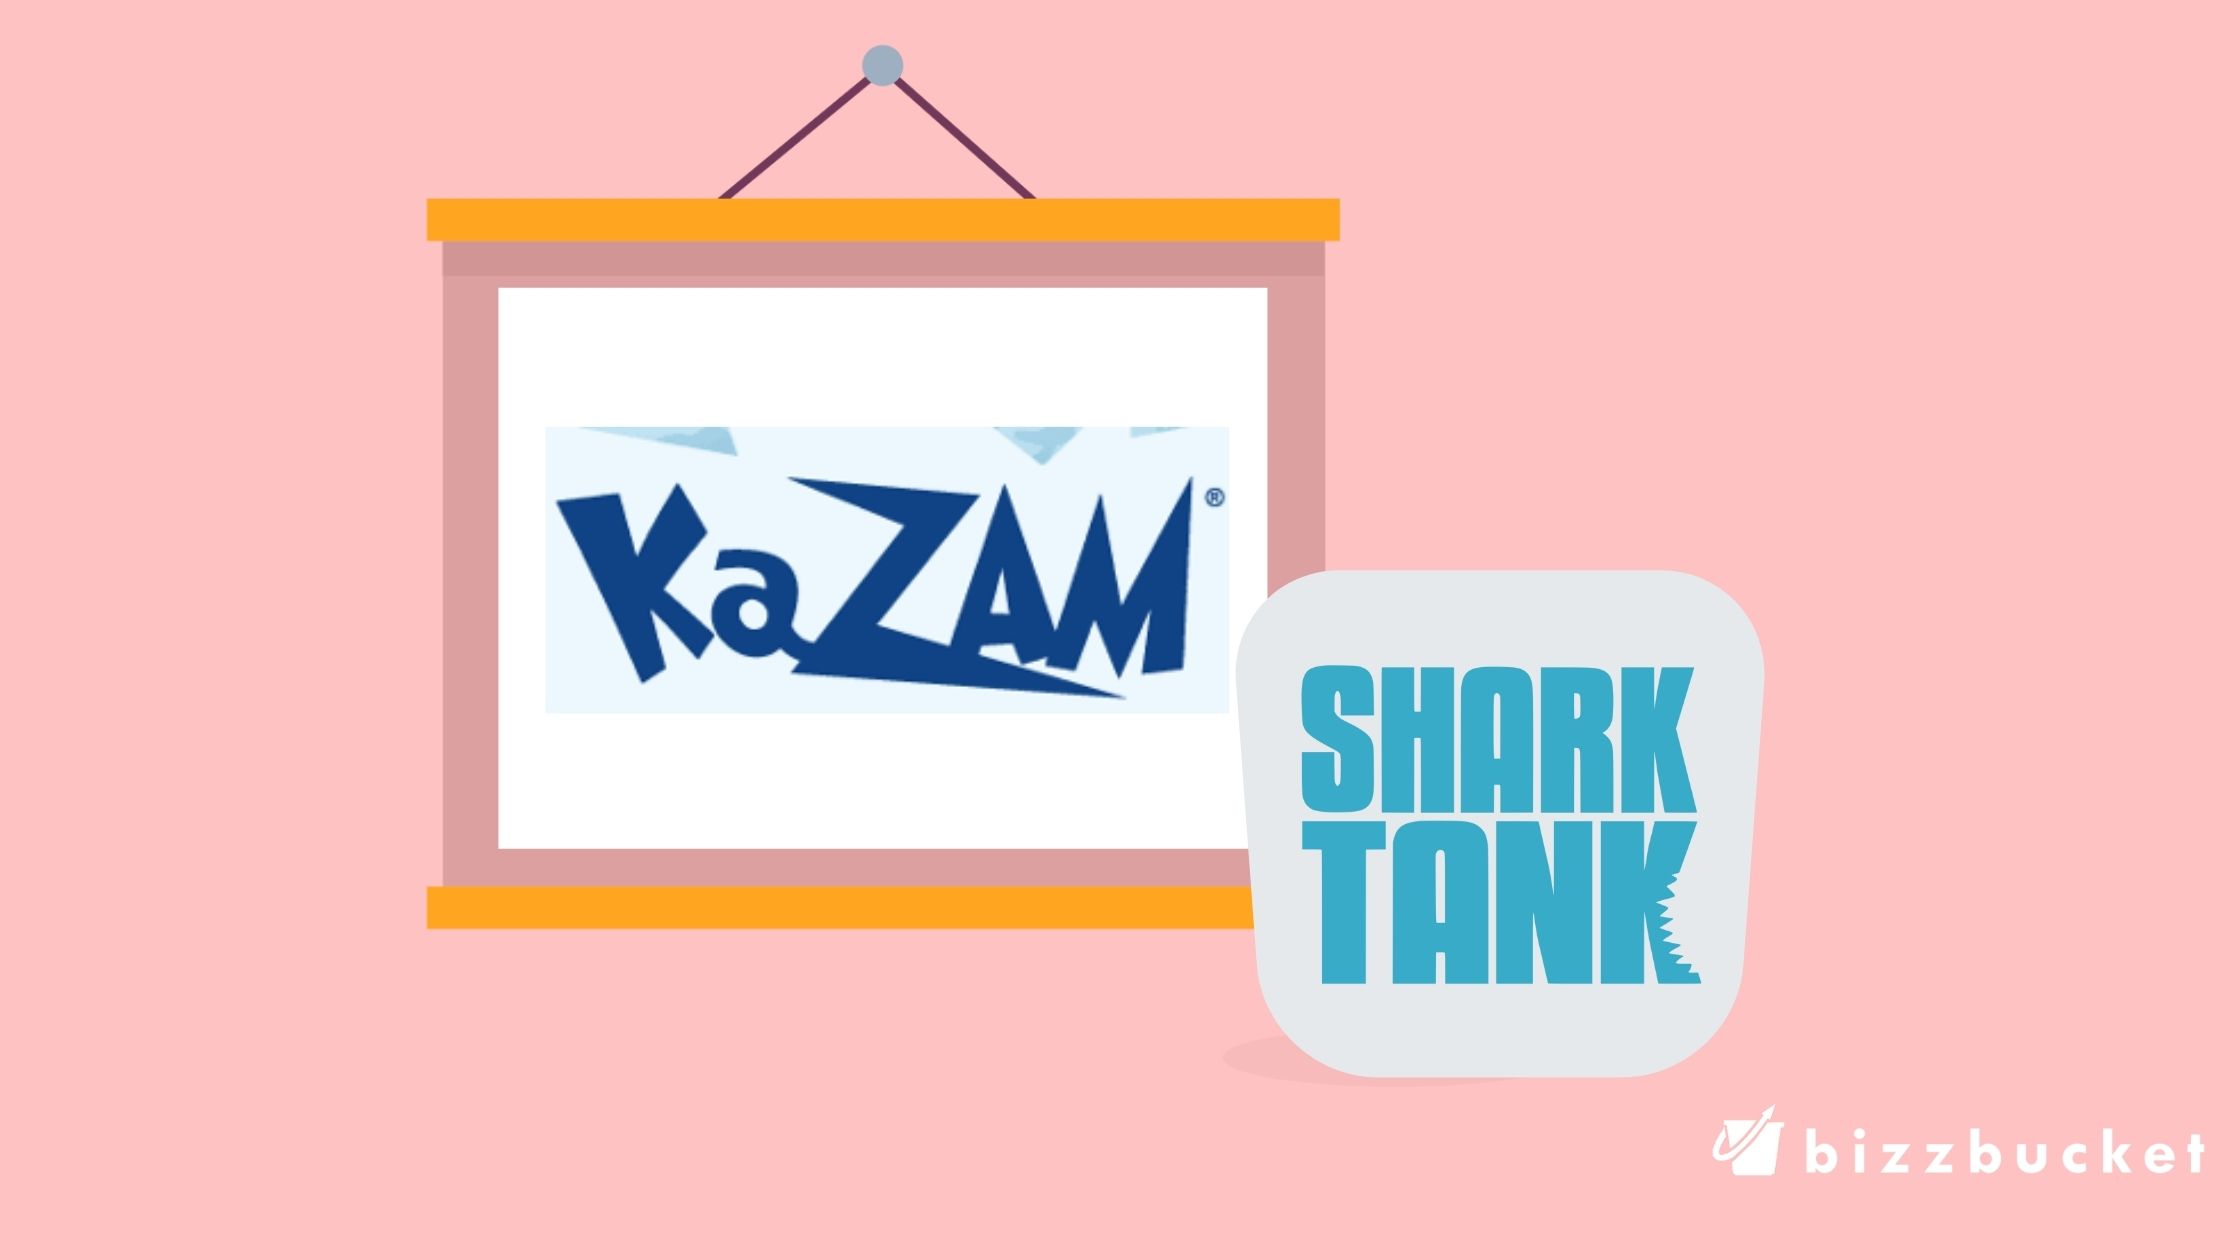 KaZAM bikes shark tank update